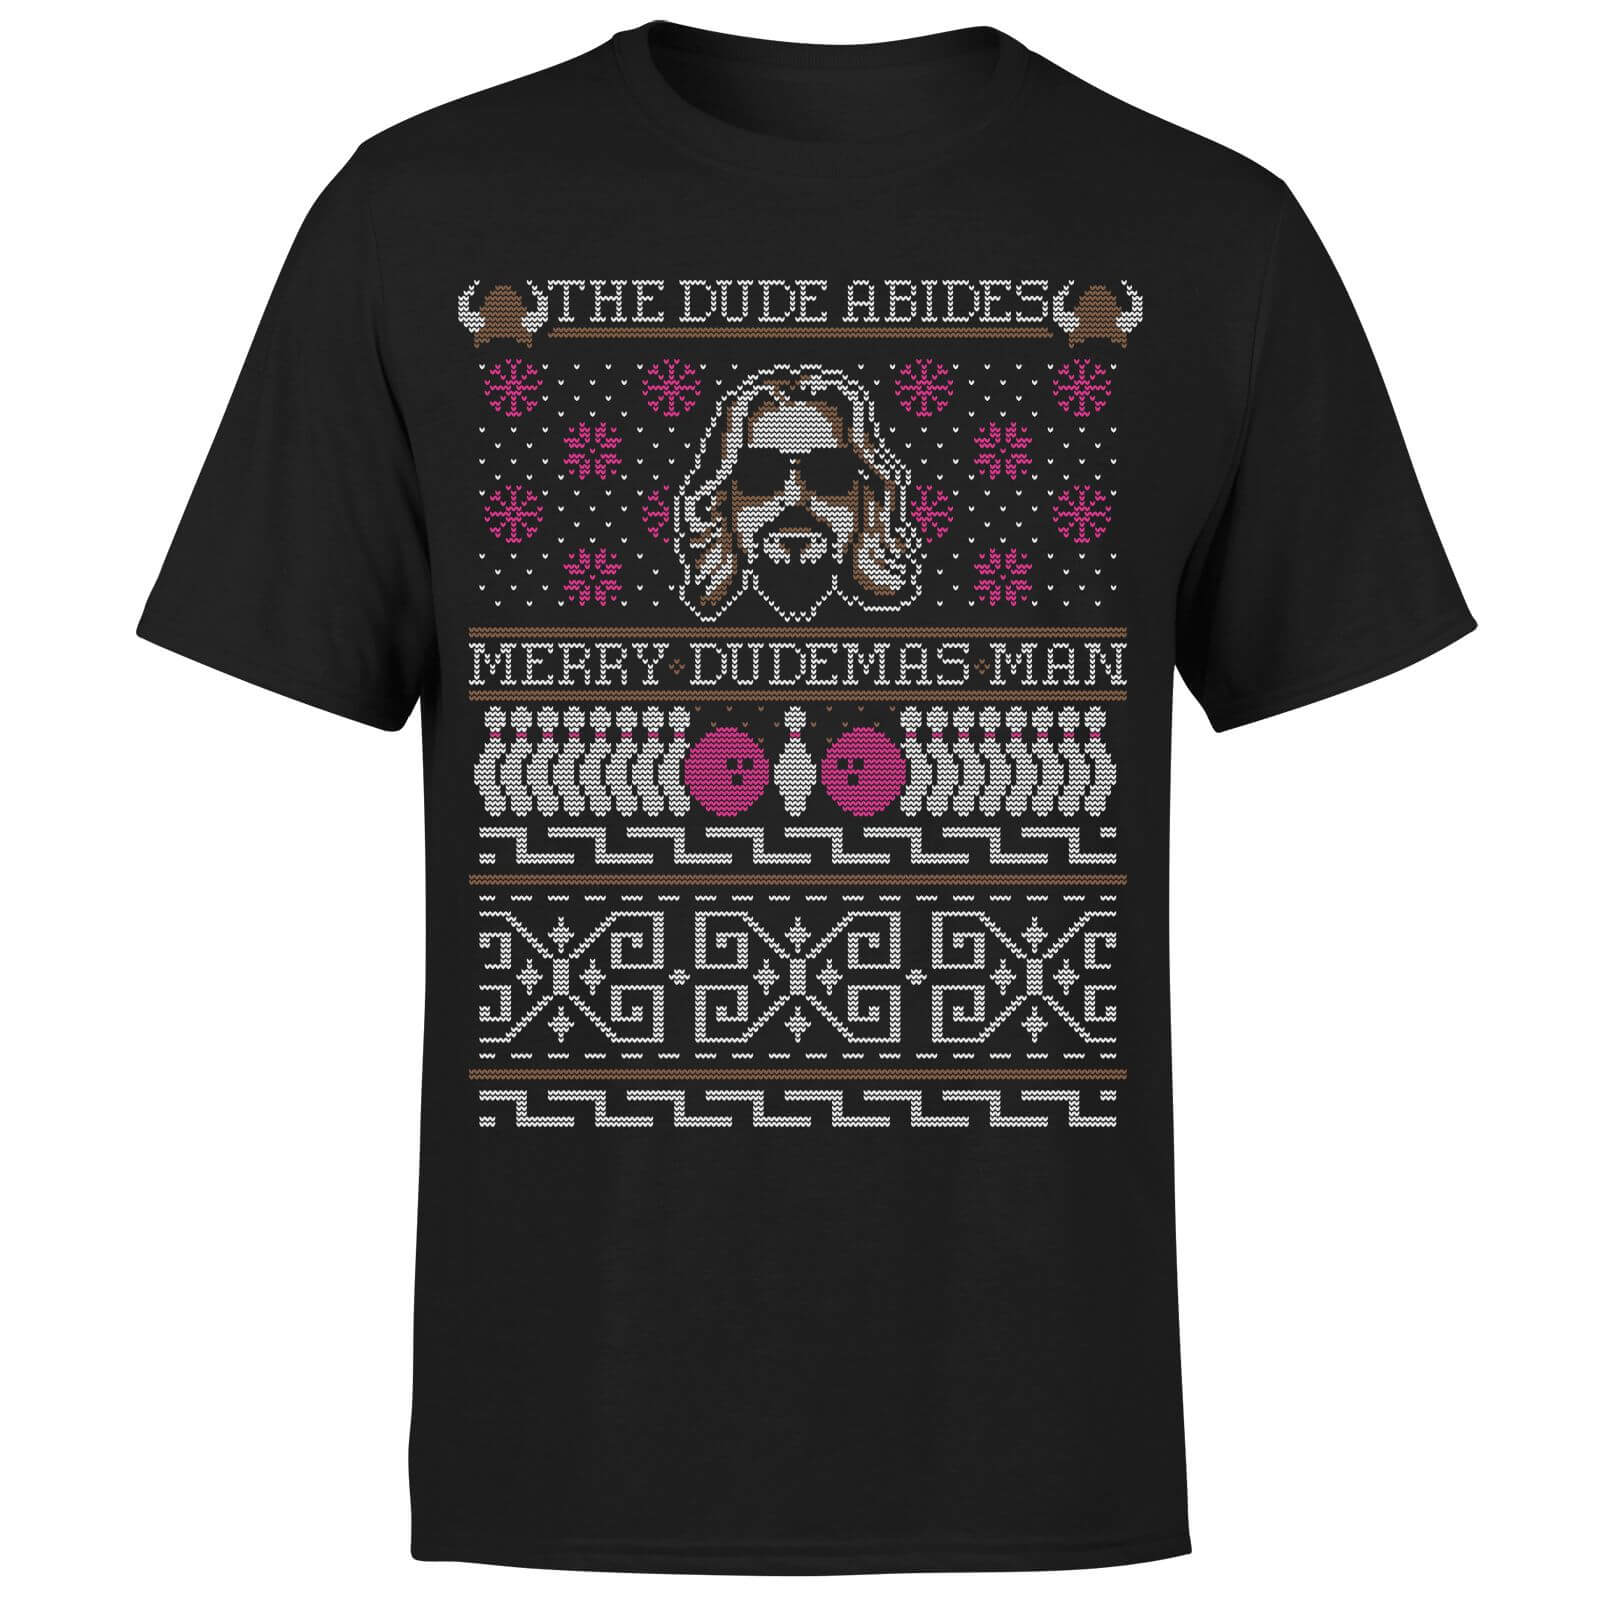 The Dude Abides Merry Dudemas Man Men's Christmas T-Shirt - Black - L - Black